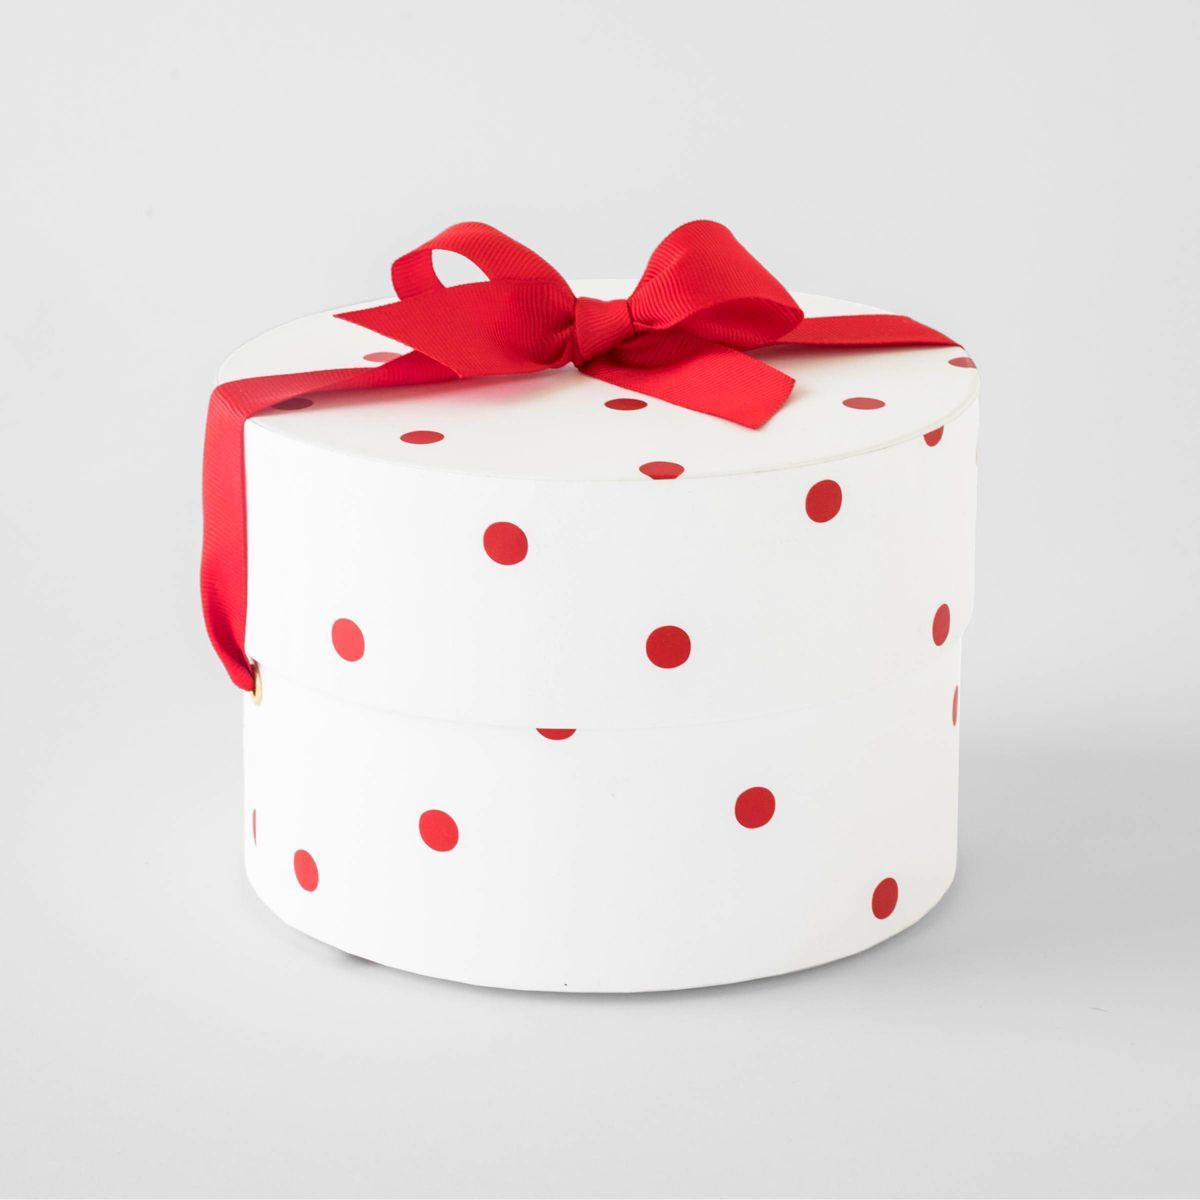 6"x4" Red Polka Dots on White Round Gift Box - Sugar Paper™ + Target | Target